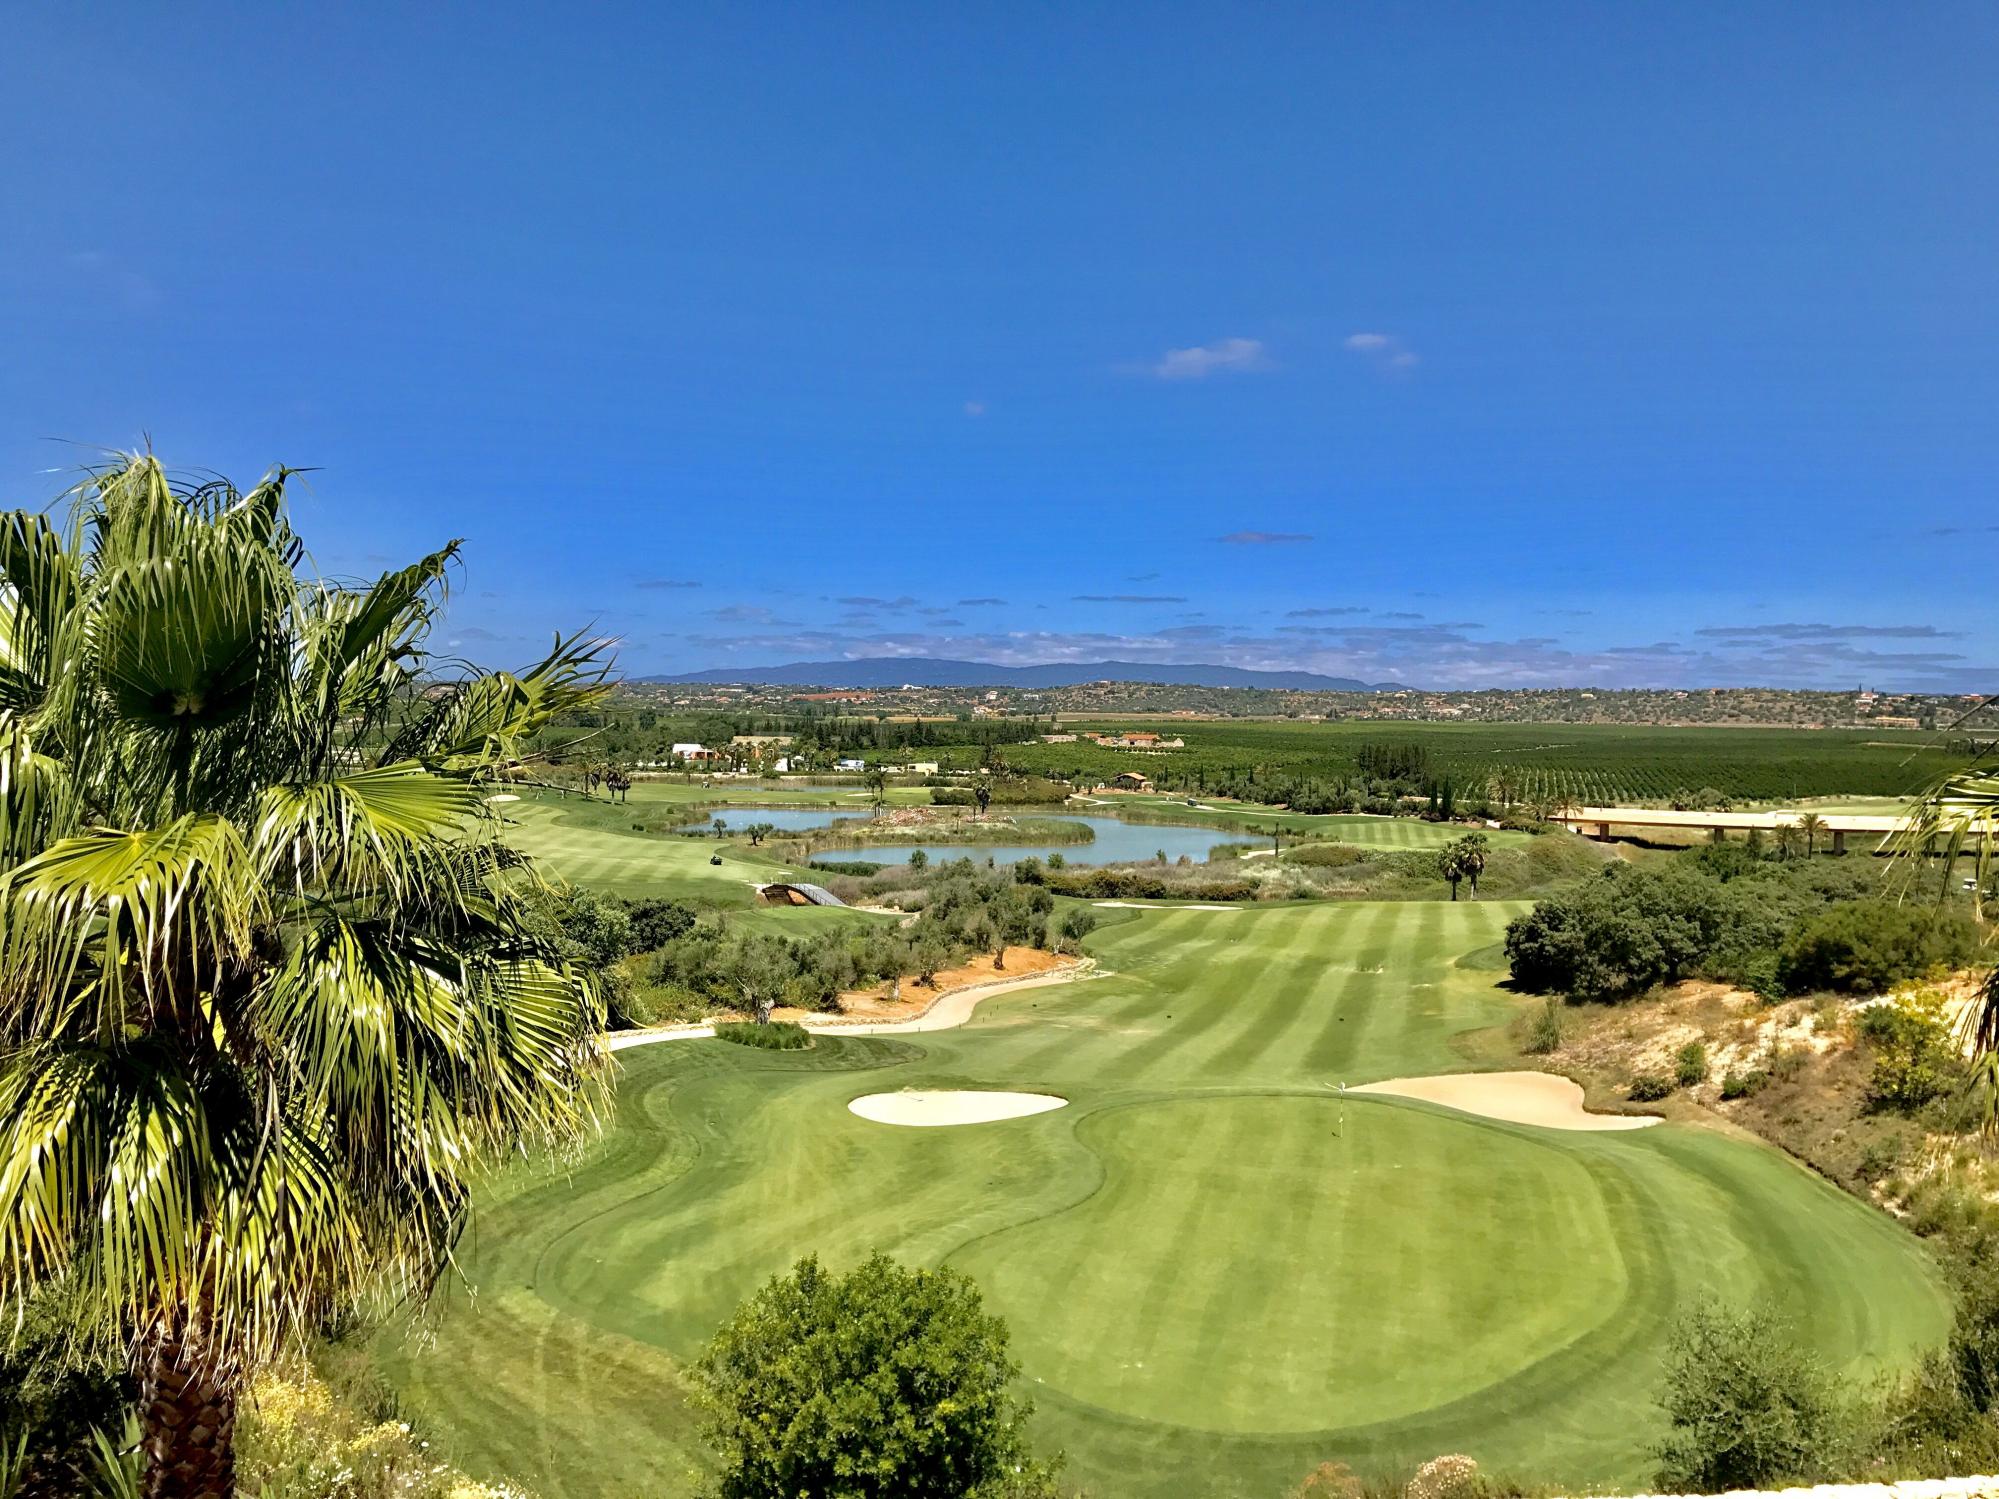 Amendoeira Faldo Course includes lots of the premiere golf course within Algarve